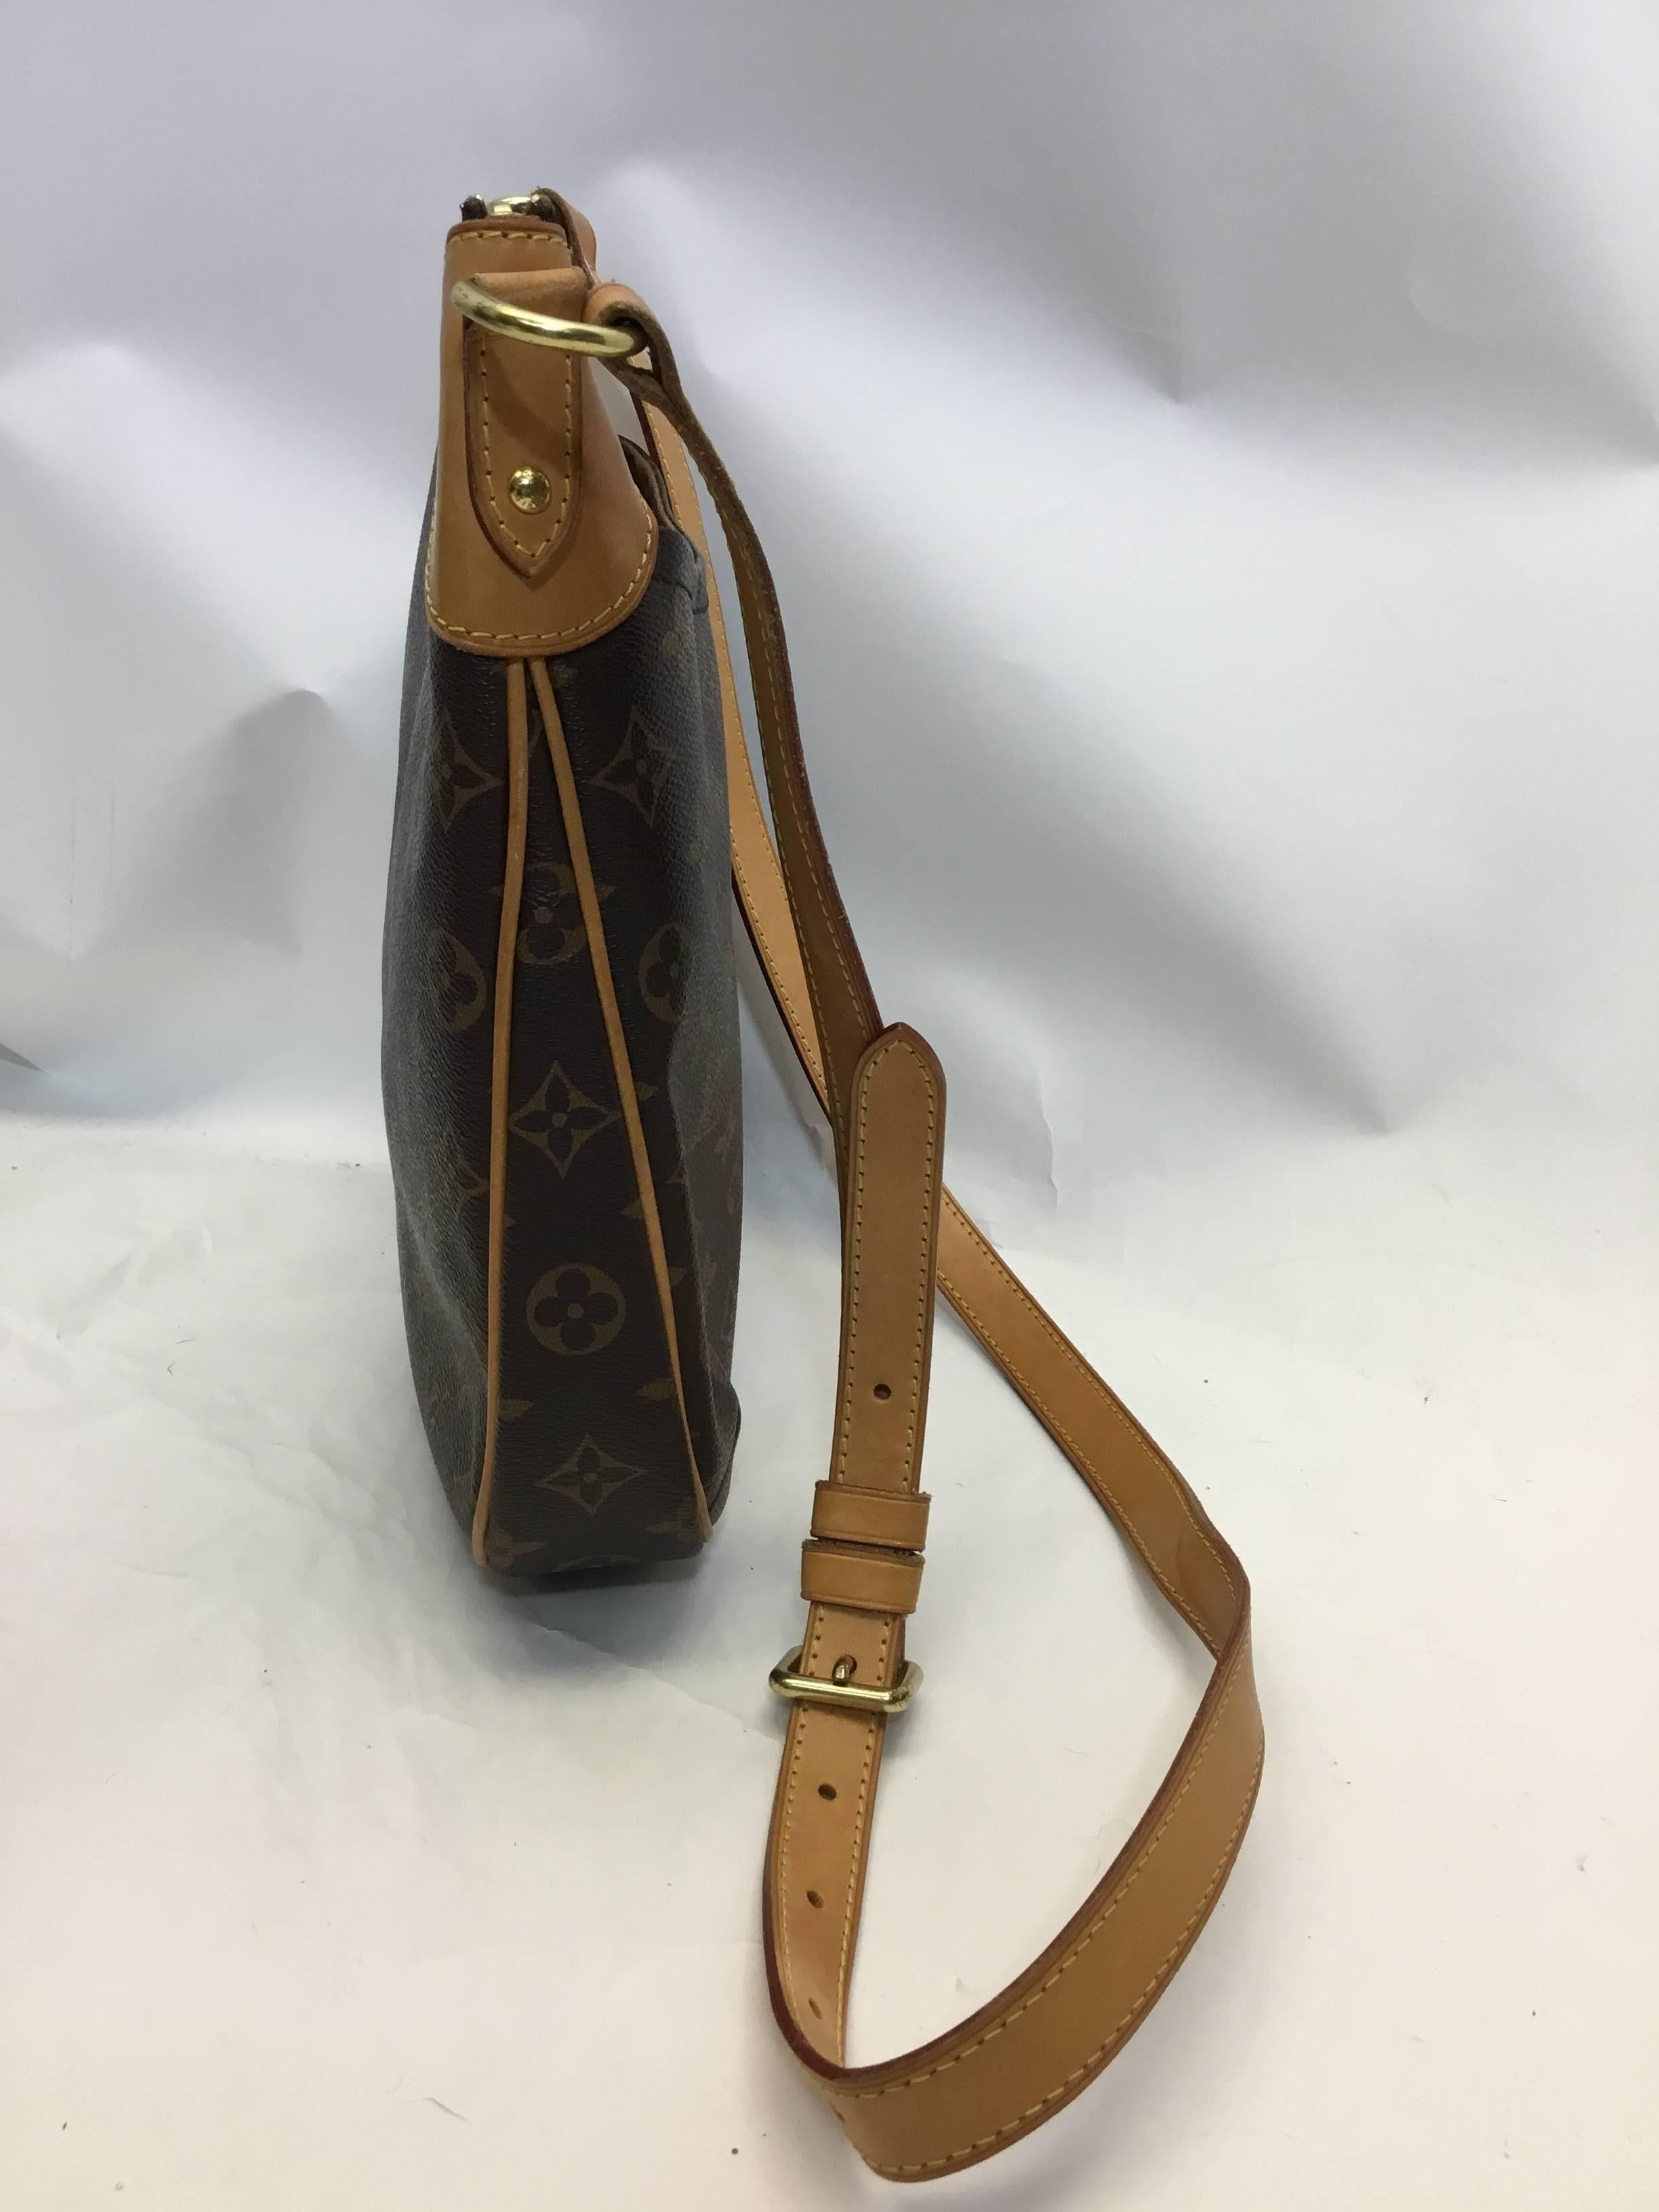 Louis Vuitton Monogram Leather Crossbody
Crossbody Strap
$799
Exterior pocket, center zip closure
